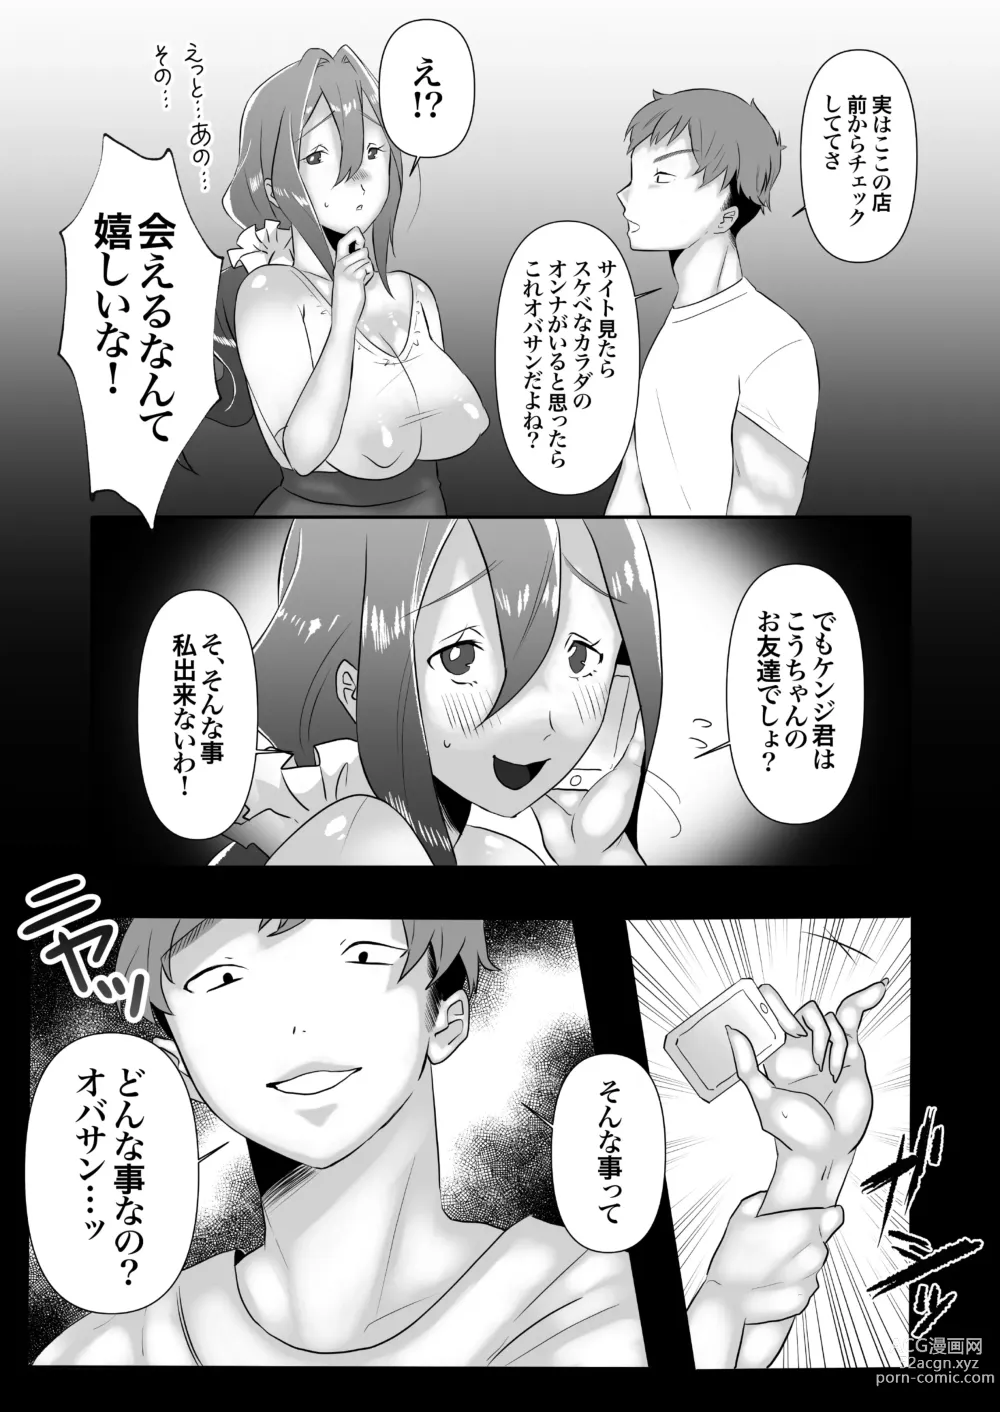 Page 9 of doujinshi DeliHeal Yondara Tomodachi no Kaa-chan ga Kita.